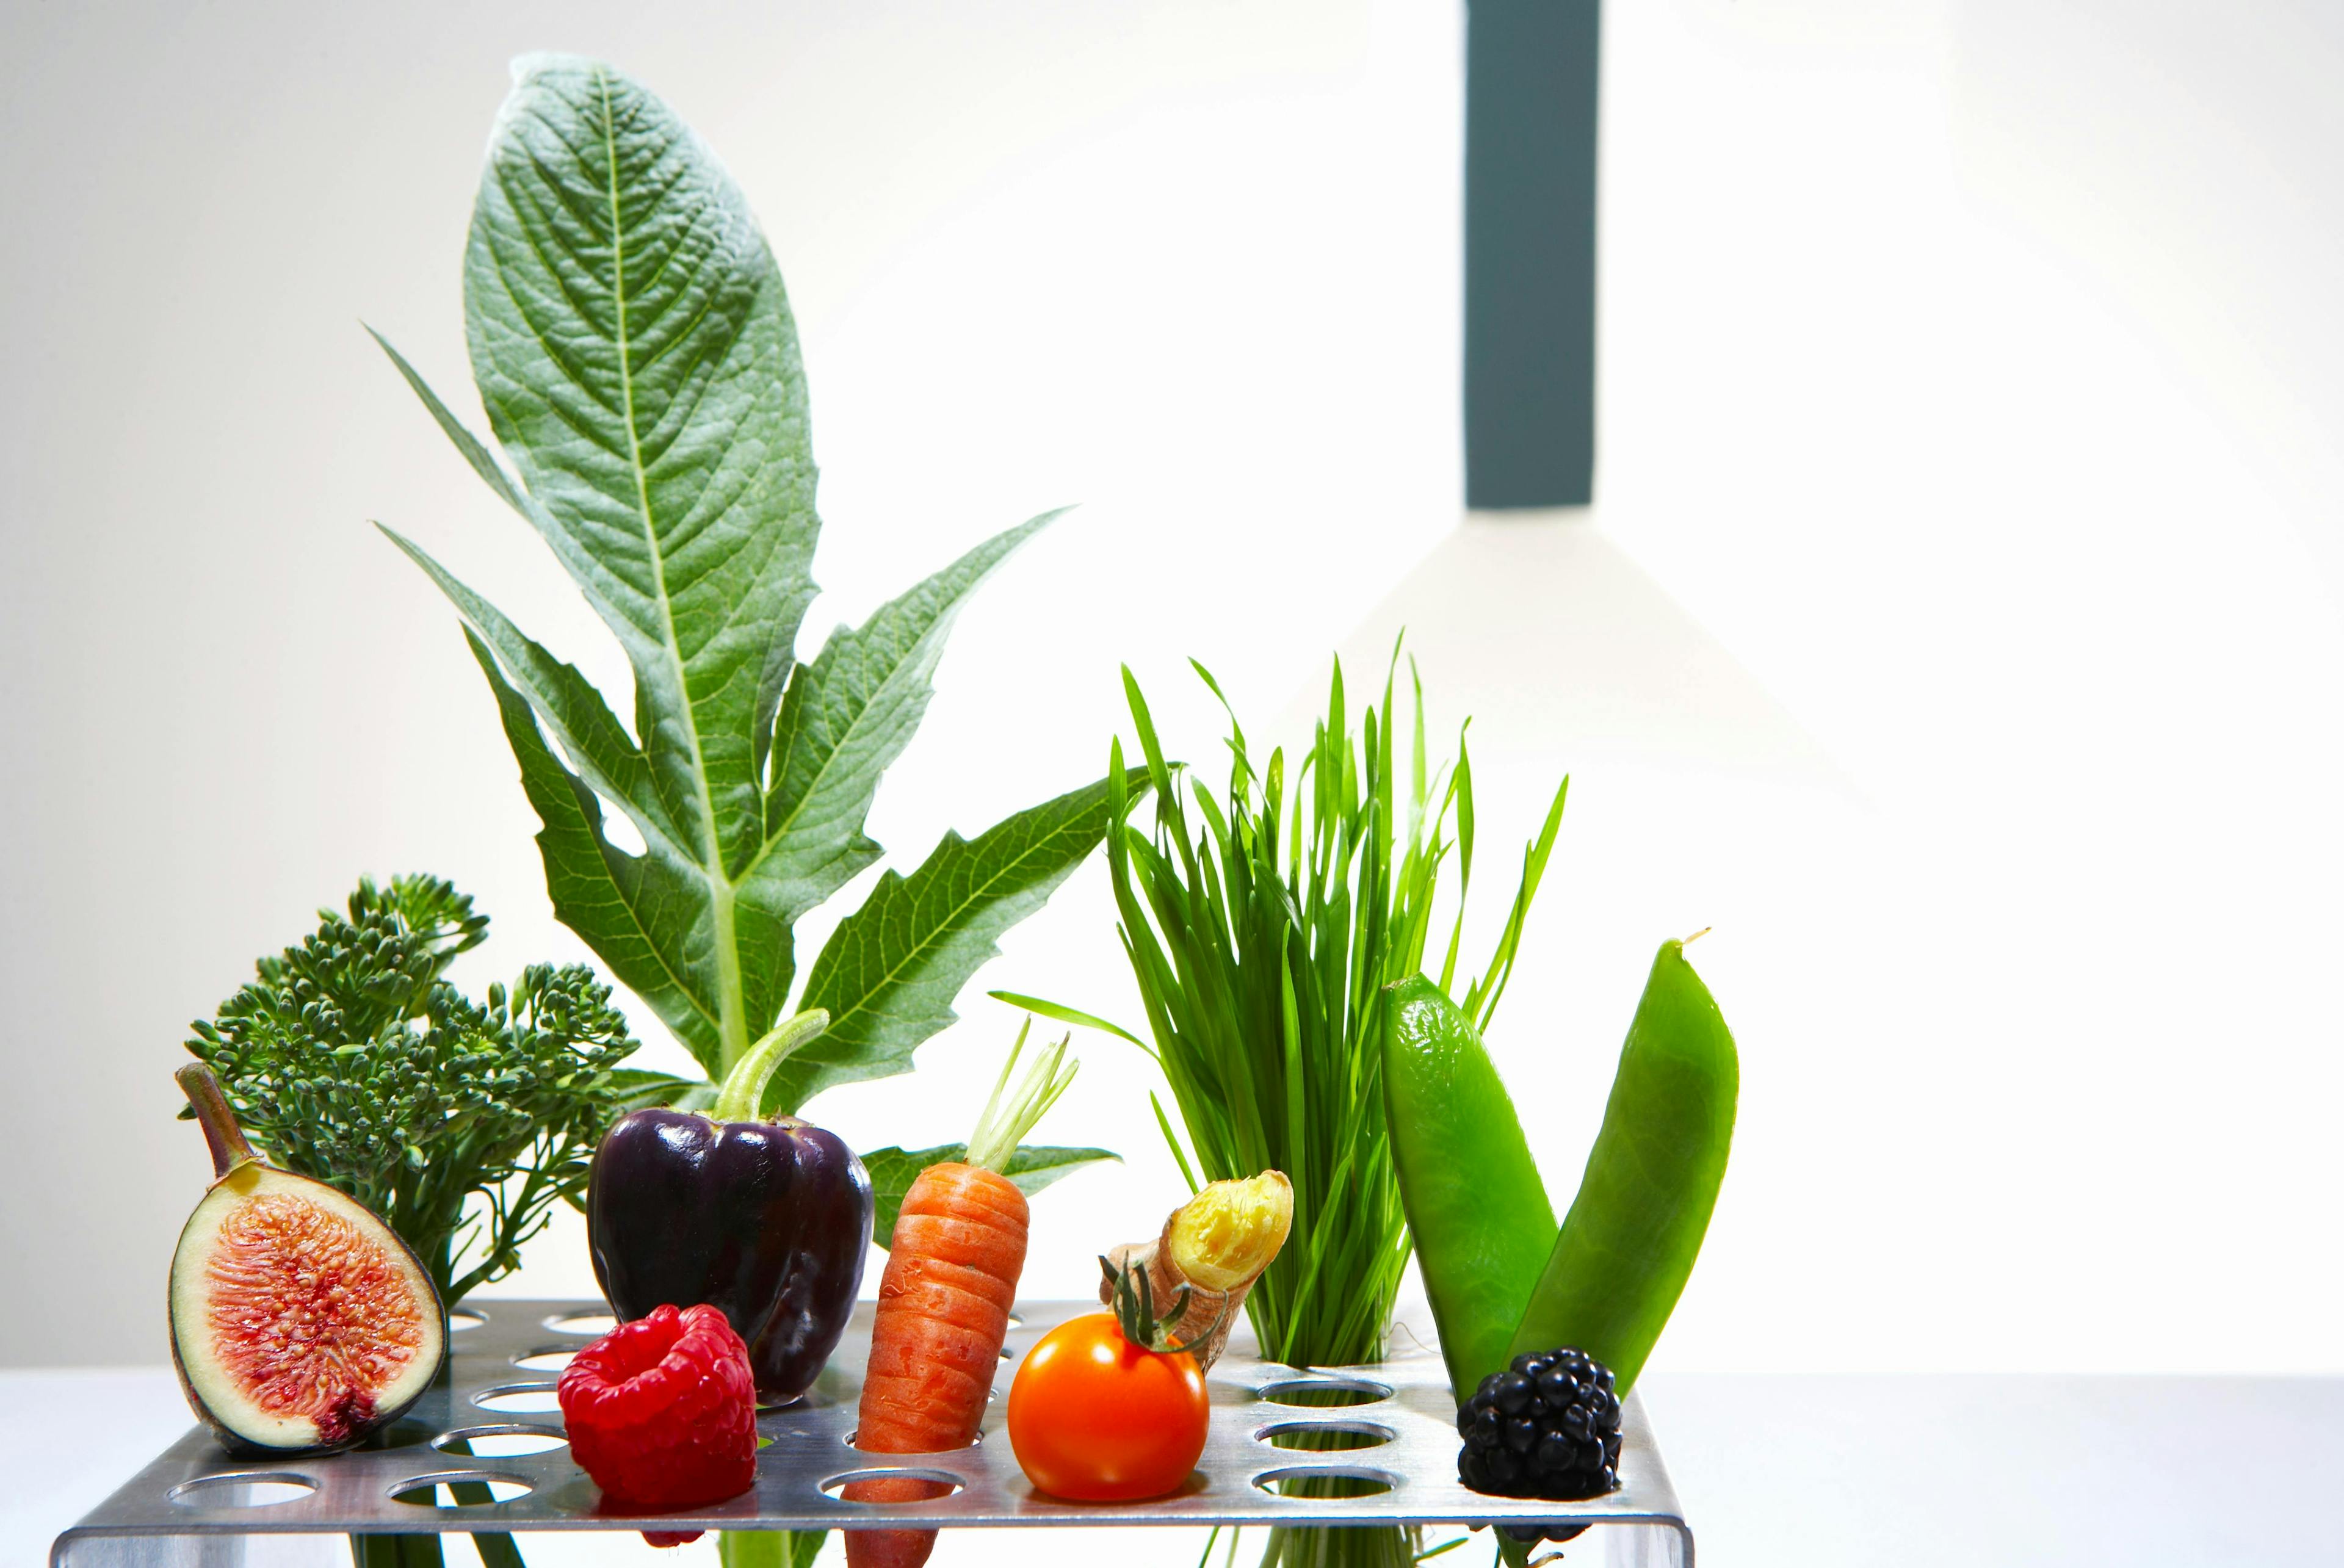 easy retouch,colour image,photography,nobody,horizontal,studio s plant food